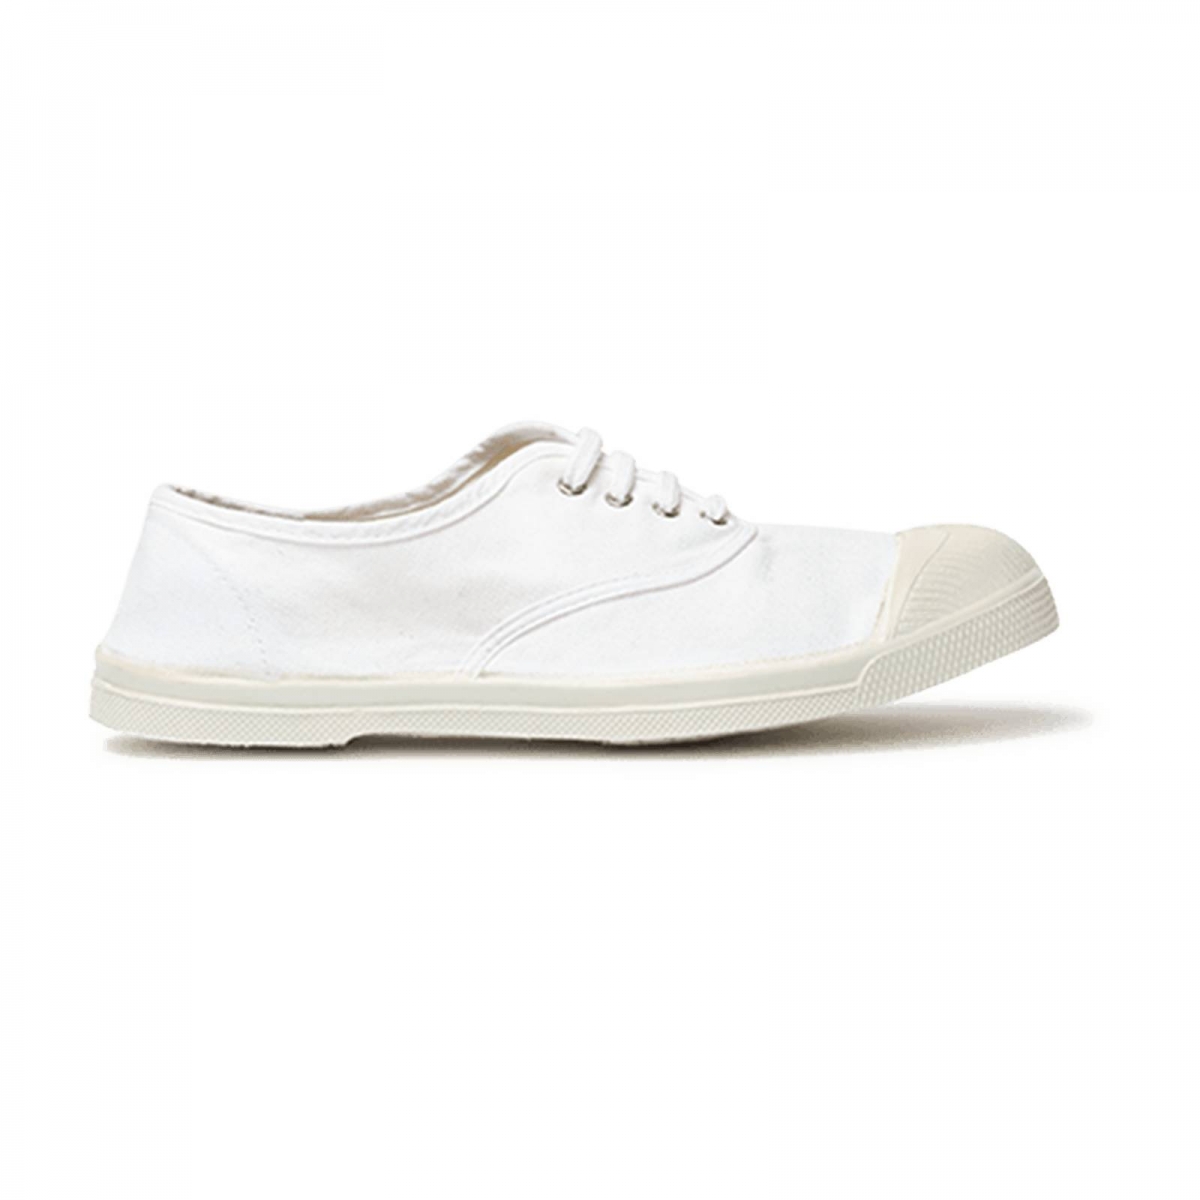 Bensimon zapatillas Lace tenis adulto blanco F15004 - 0101